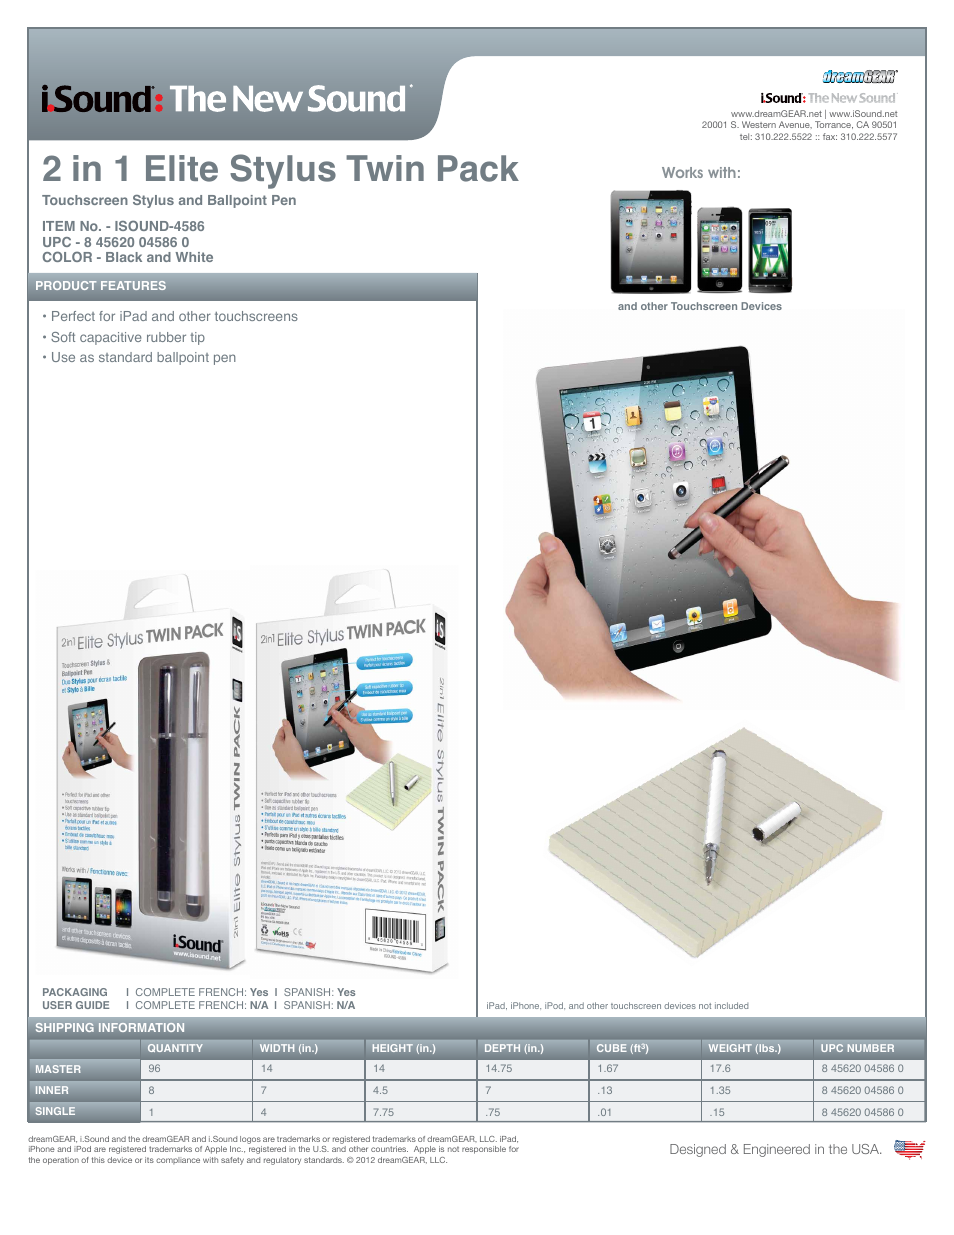 2 in 1 Elite Stylus Twin Pack - Sell Sheet